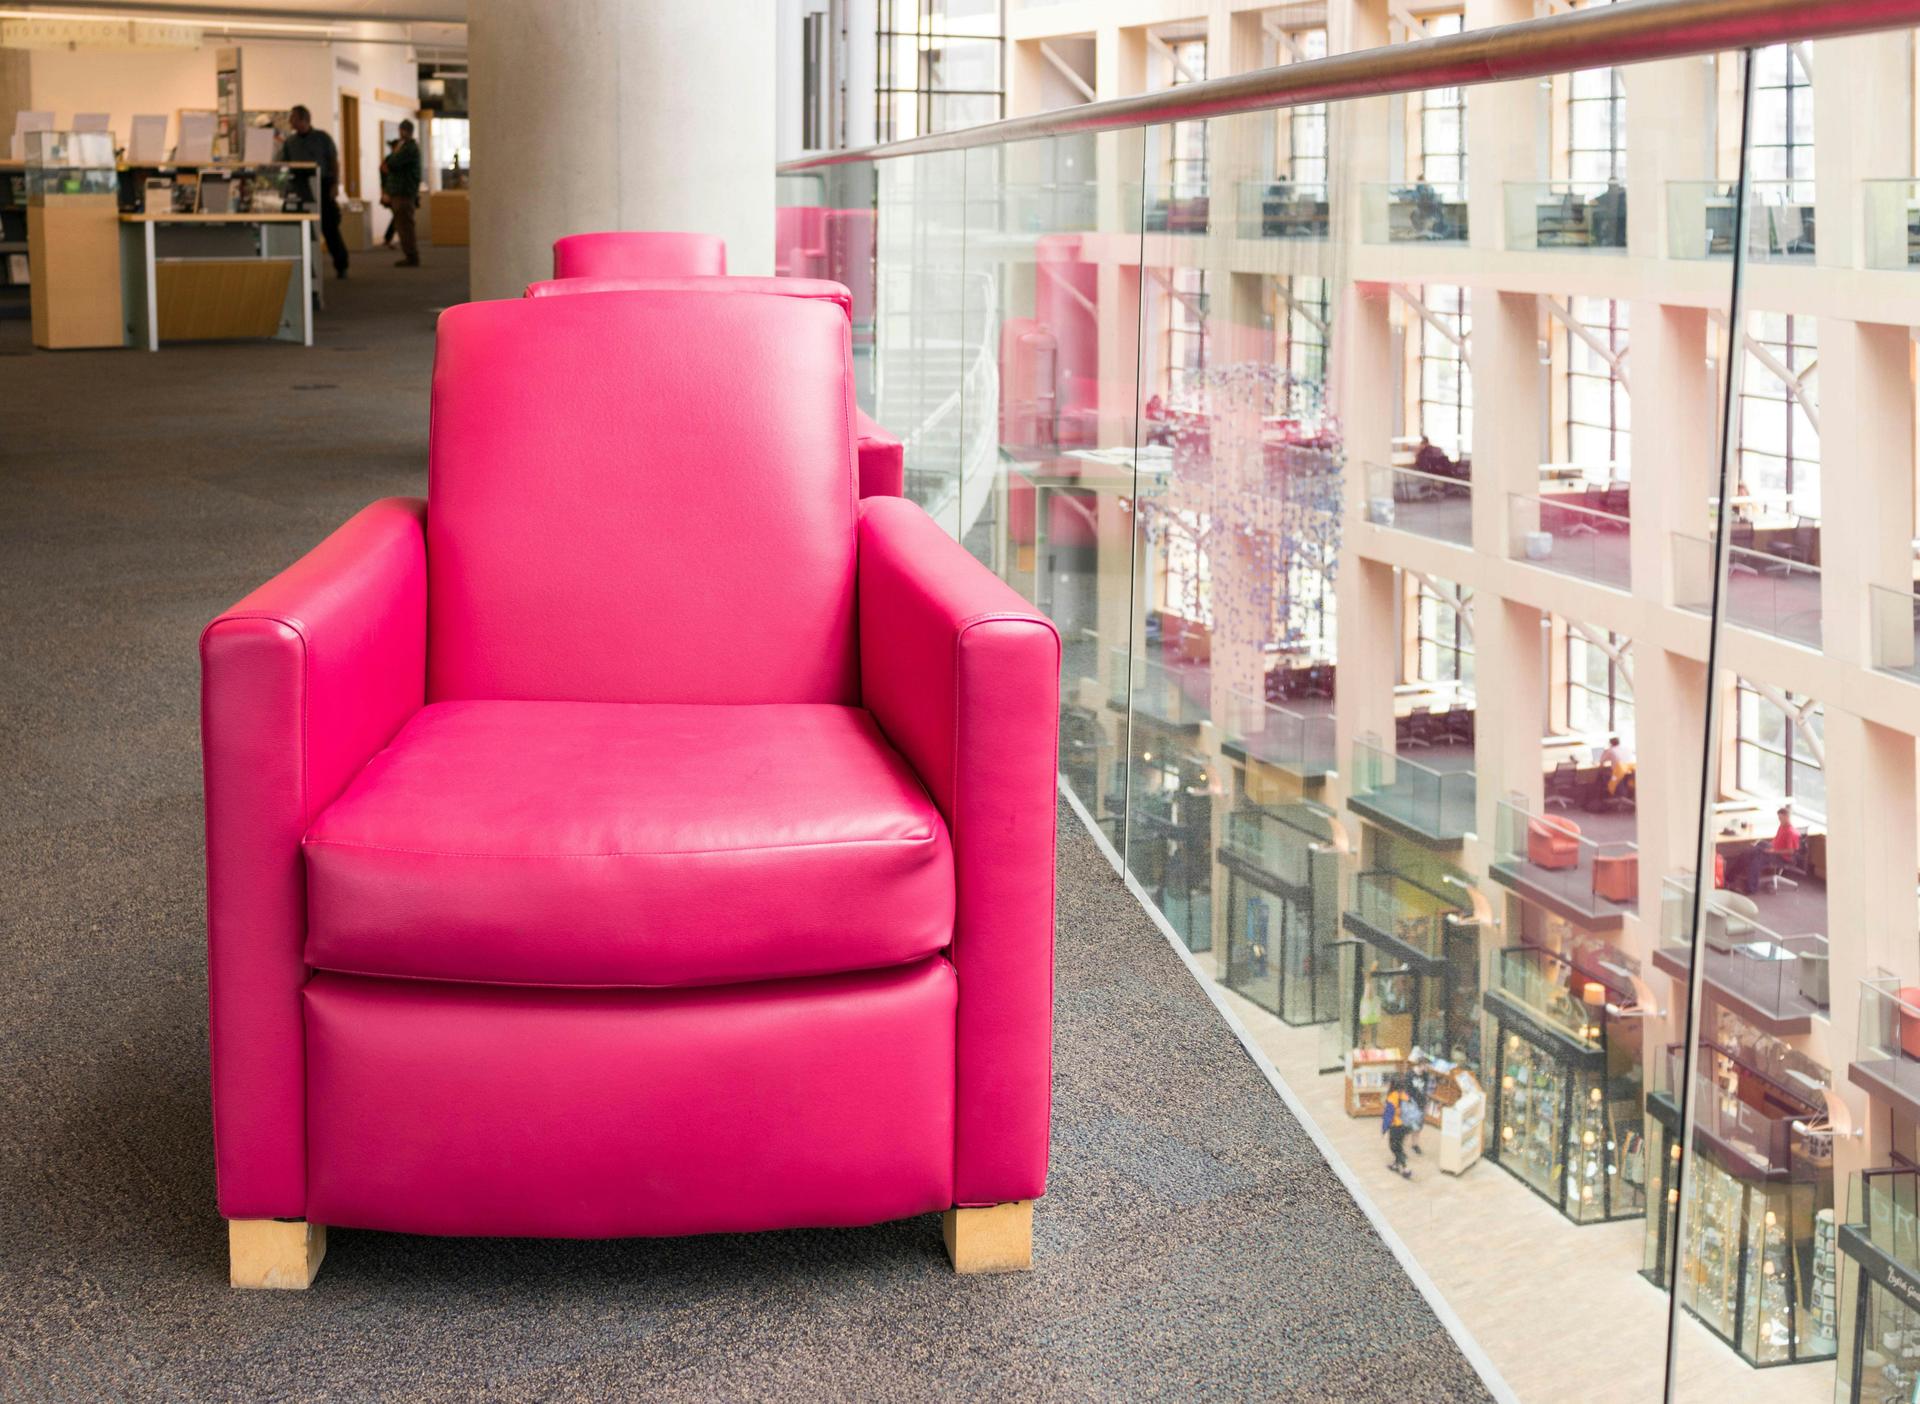 Salt Lake City, Utah, USA - May 2, 2018: Pink Leather Chair inside Salt Lake City Public Library, Utah.